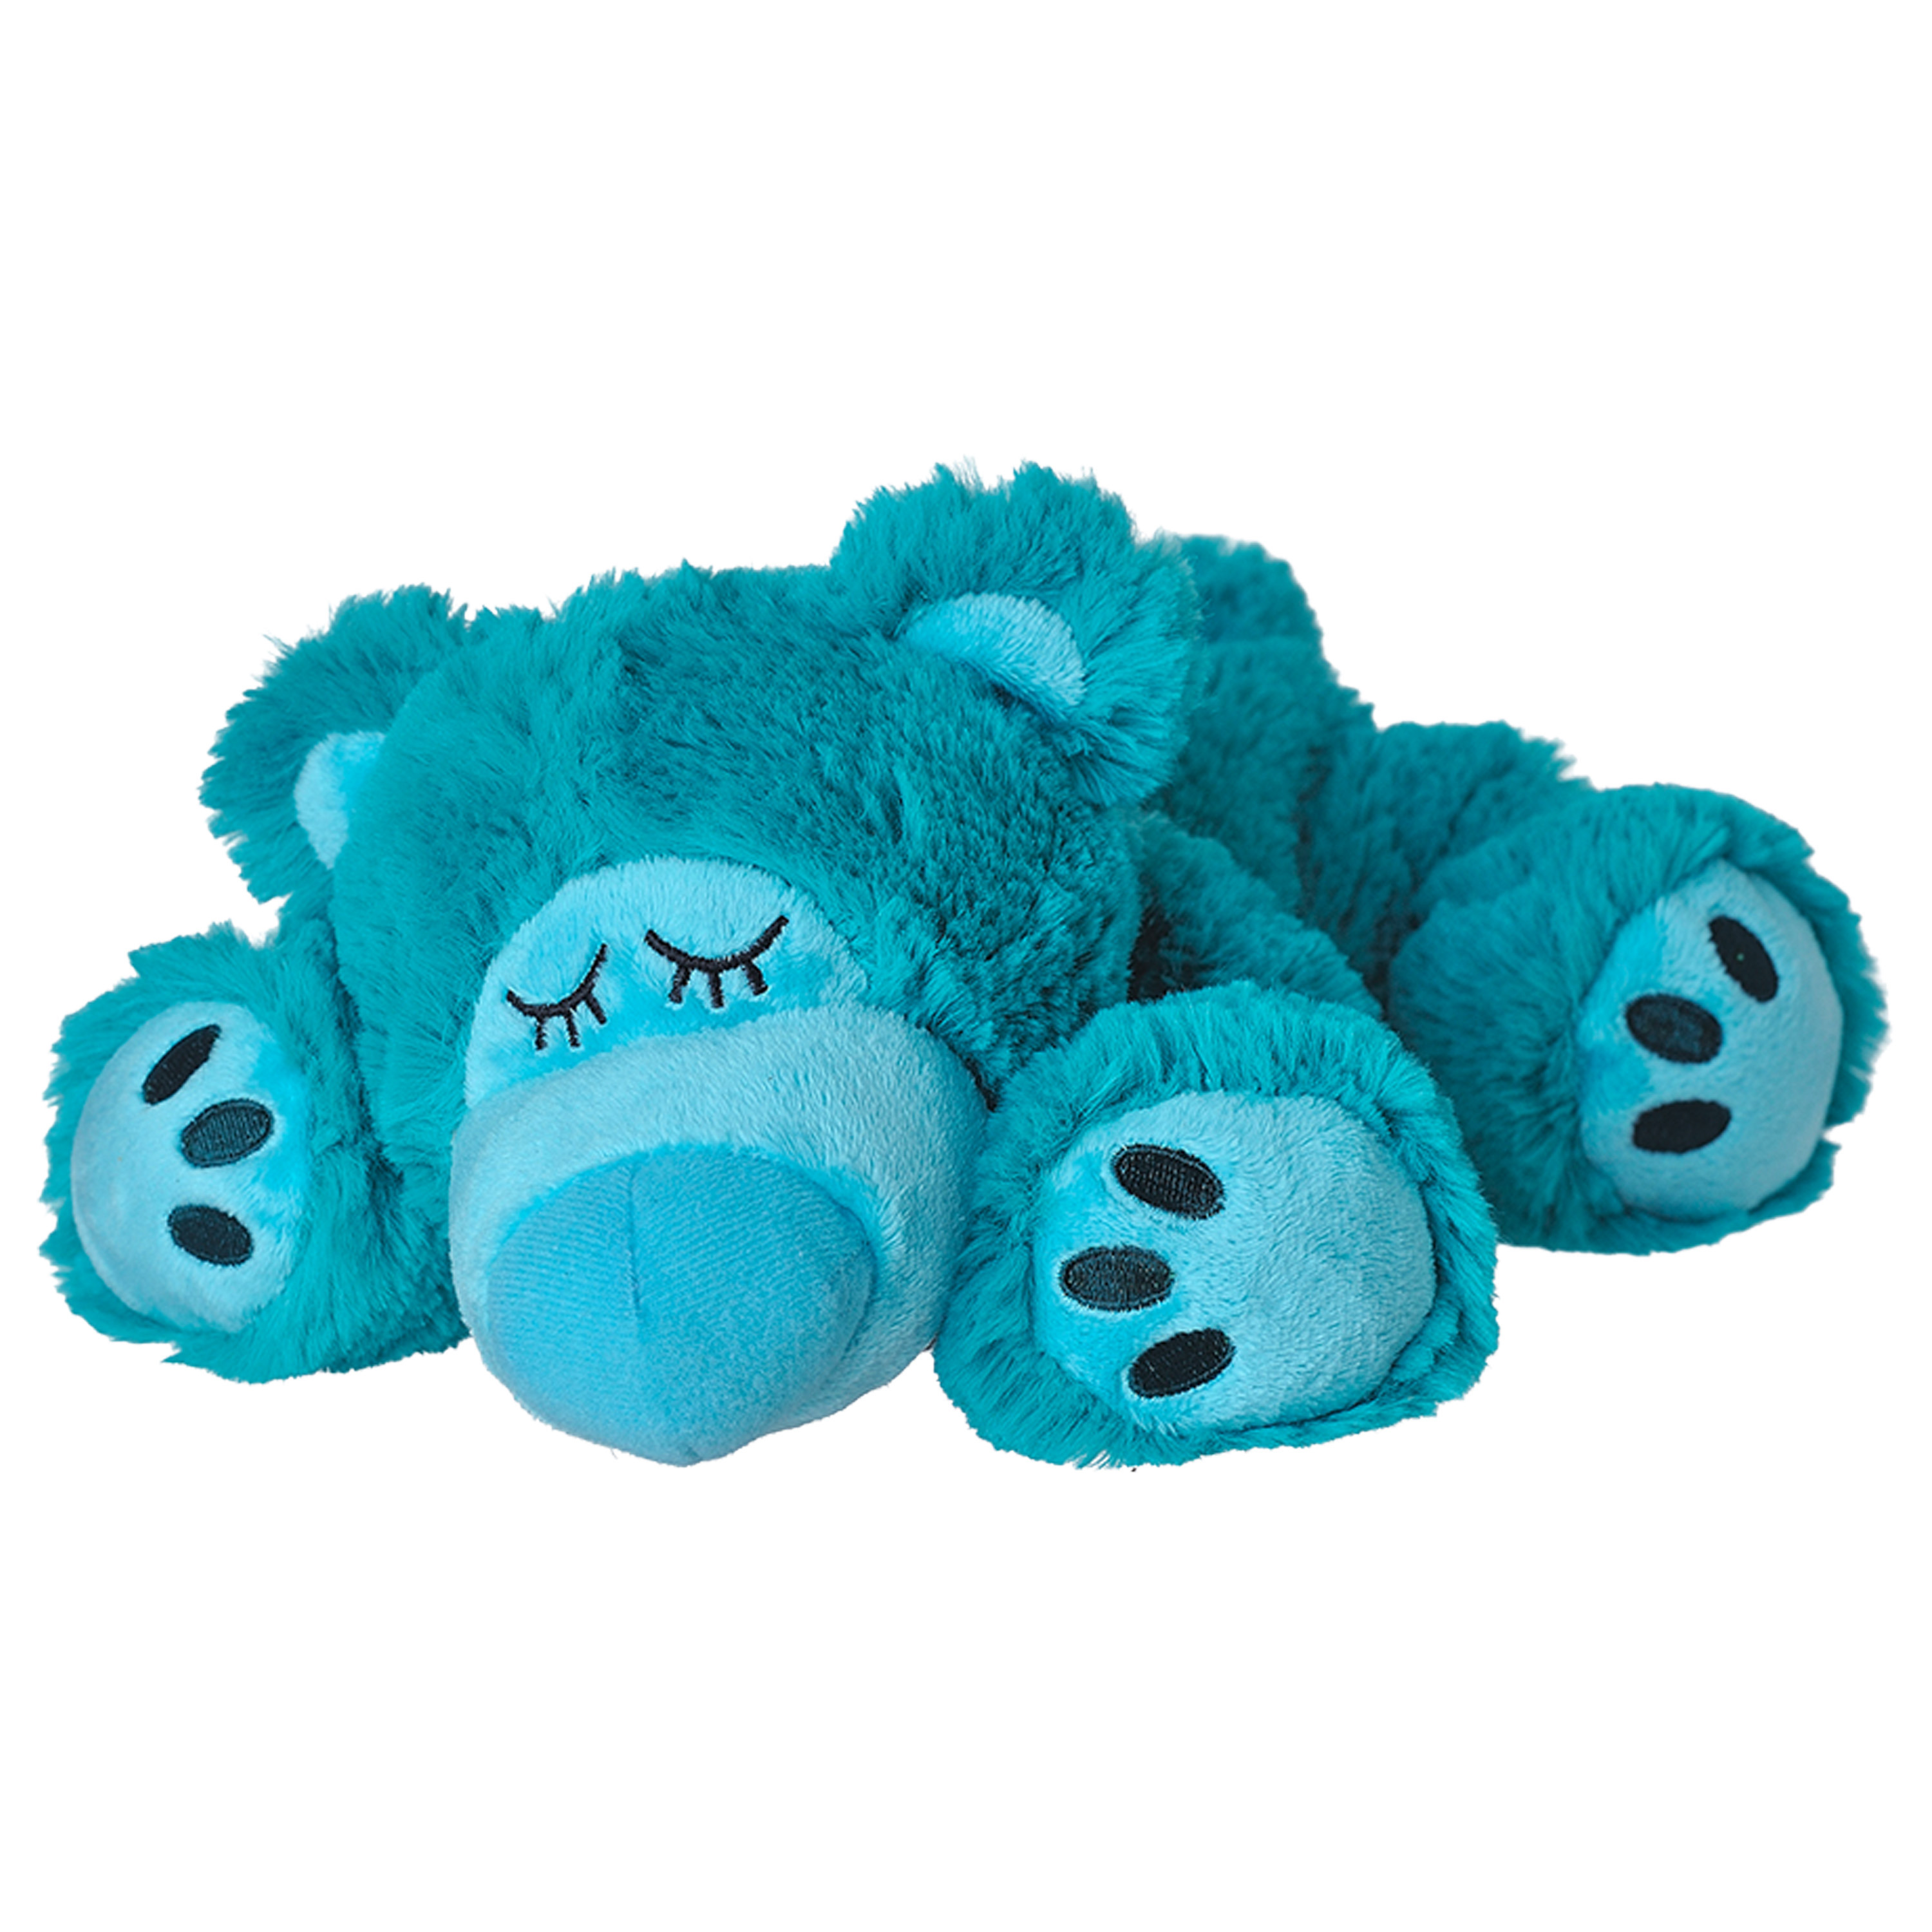 Warmies Warmte-magnetron opwarm knuffel Teddybeer turquoise 32 cm pittenzak